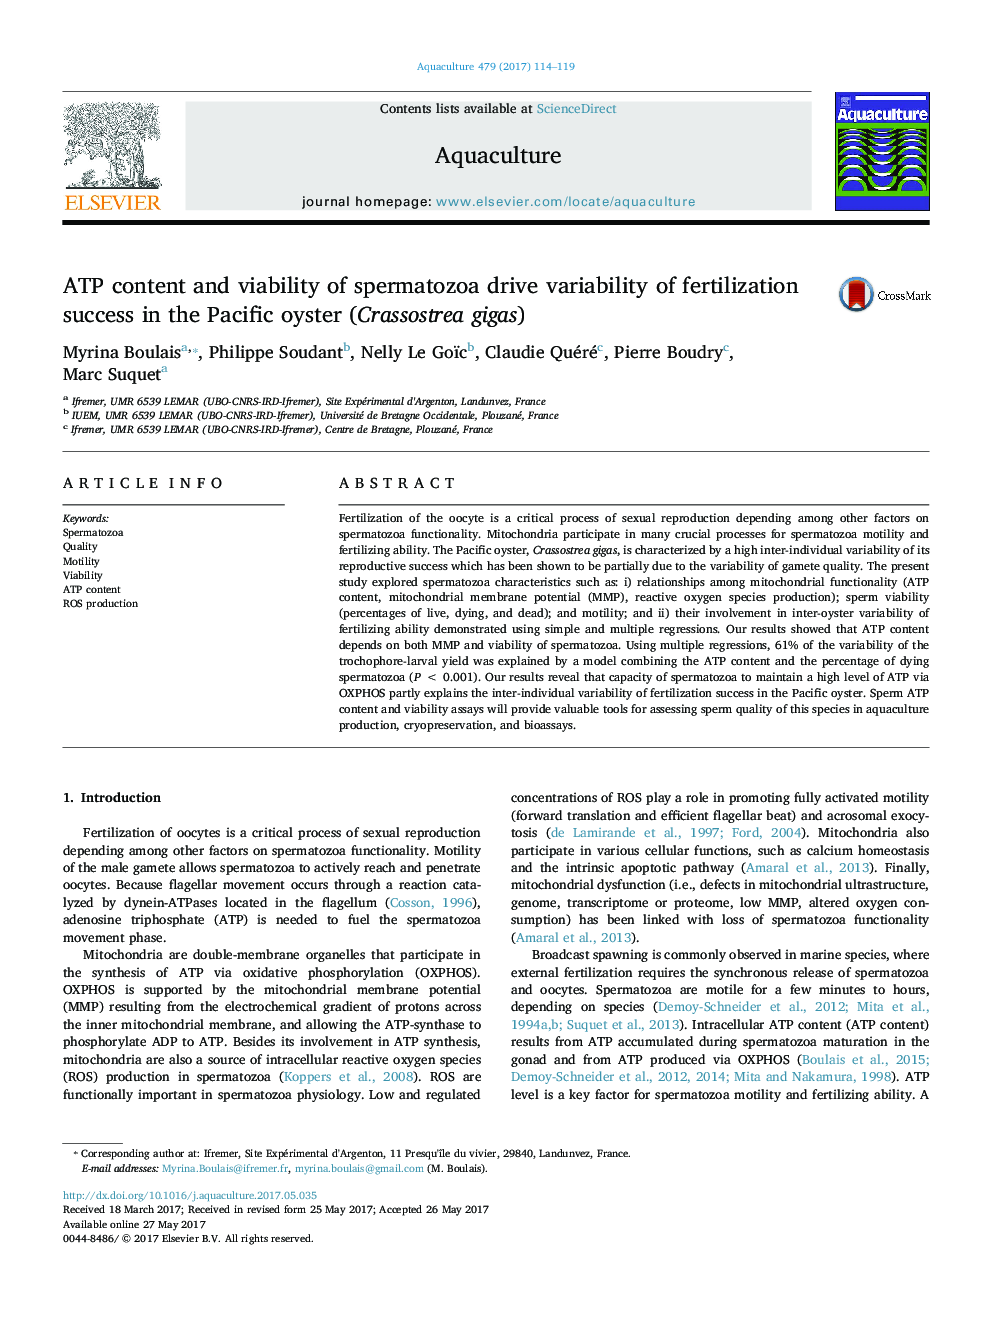 ATP content and viability of spermatozoa drive variability of fertilization success in the Pacific oyster (Crassostrea gigas)